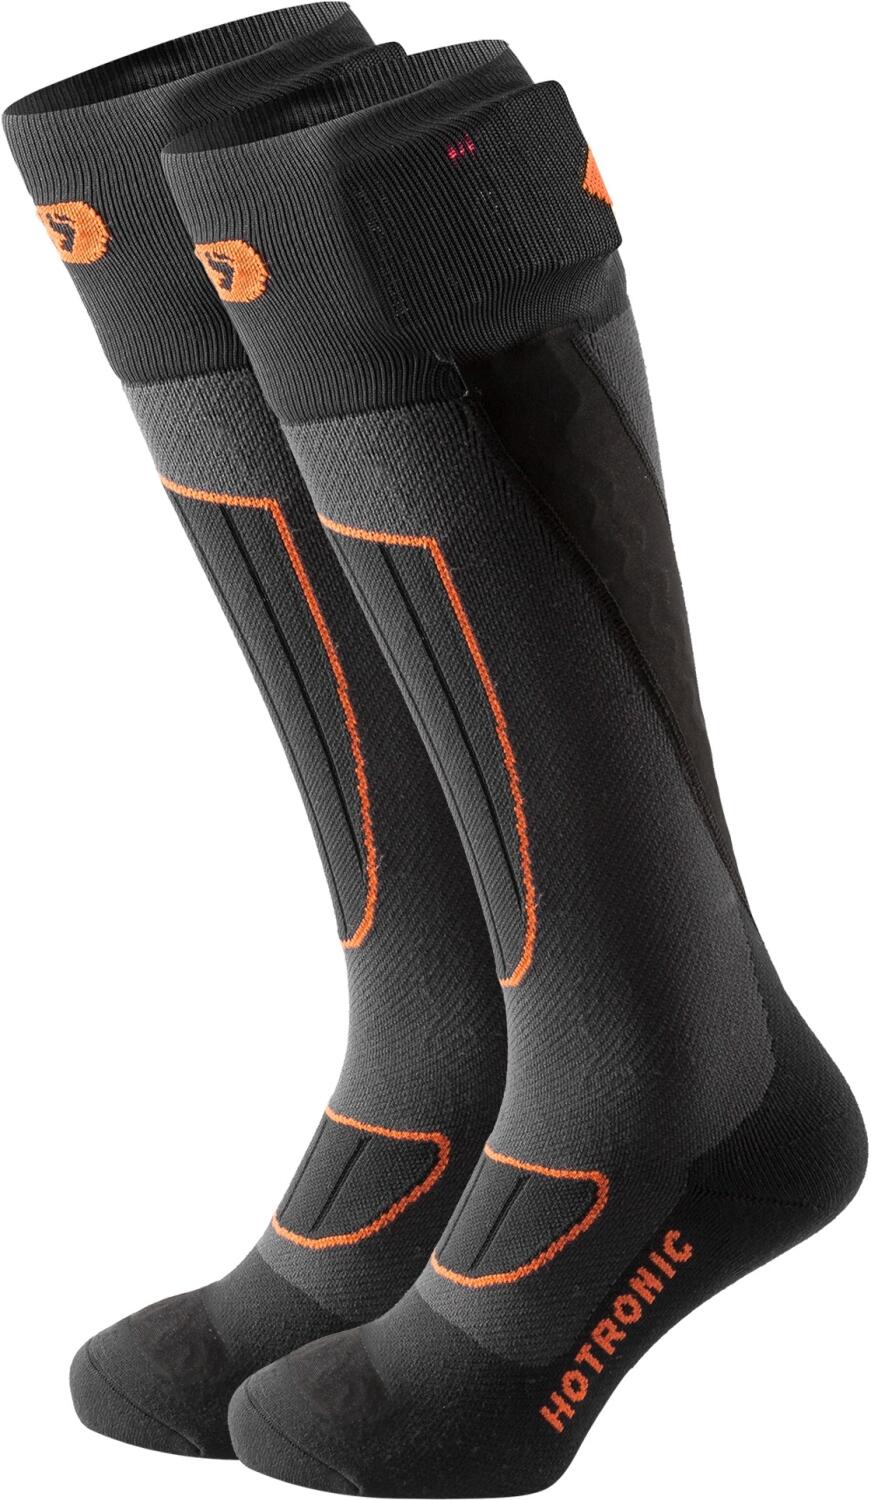 Hotronic Heat Socks Surround Comfort (39.0 - 41.0, anthrazit/orange, 1 Paar) von Hotronic